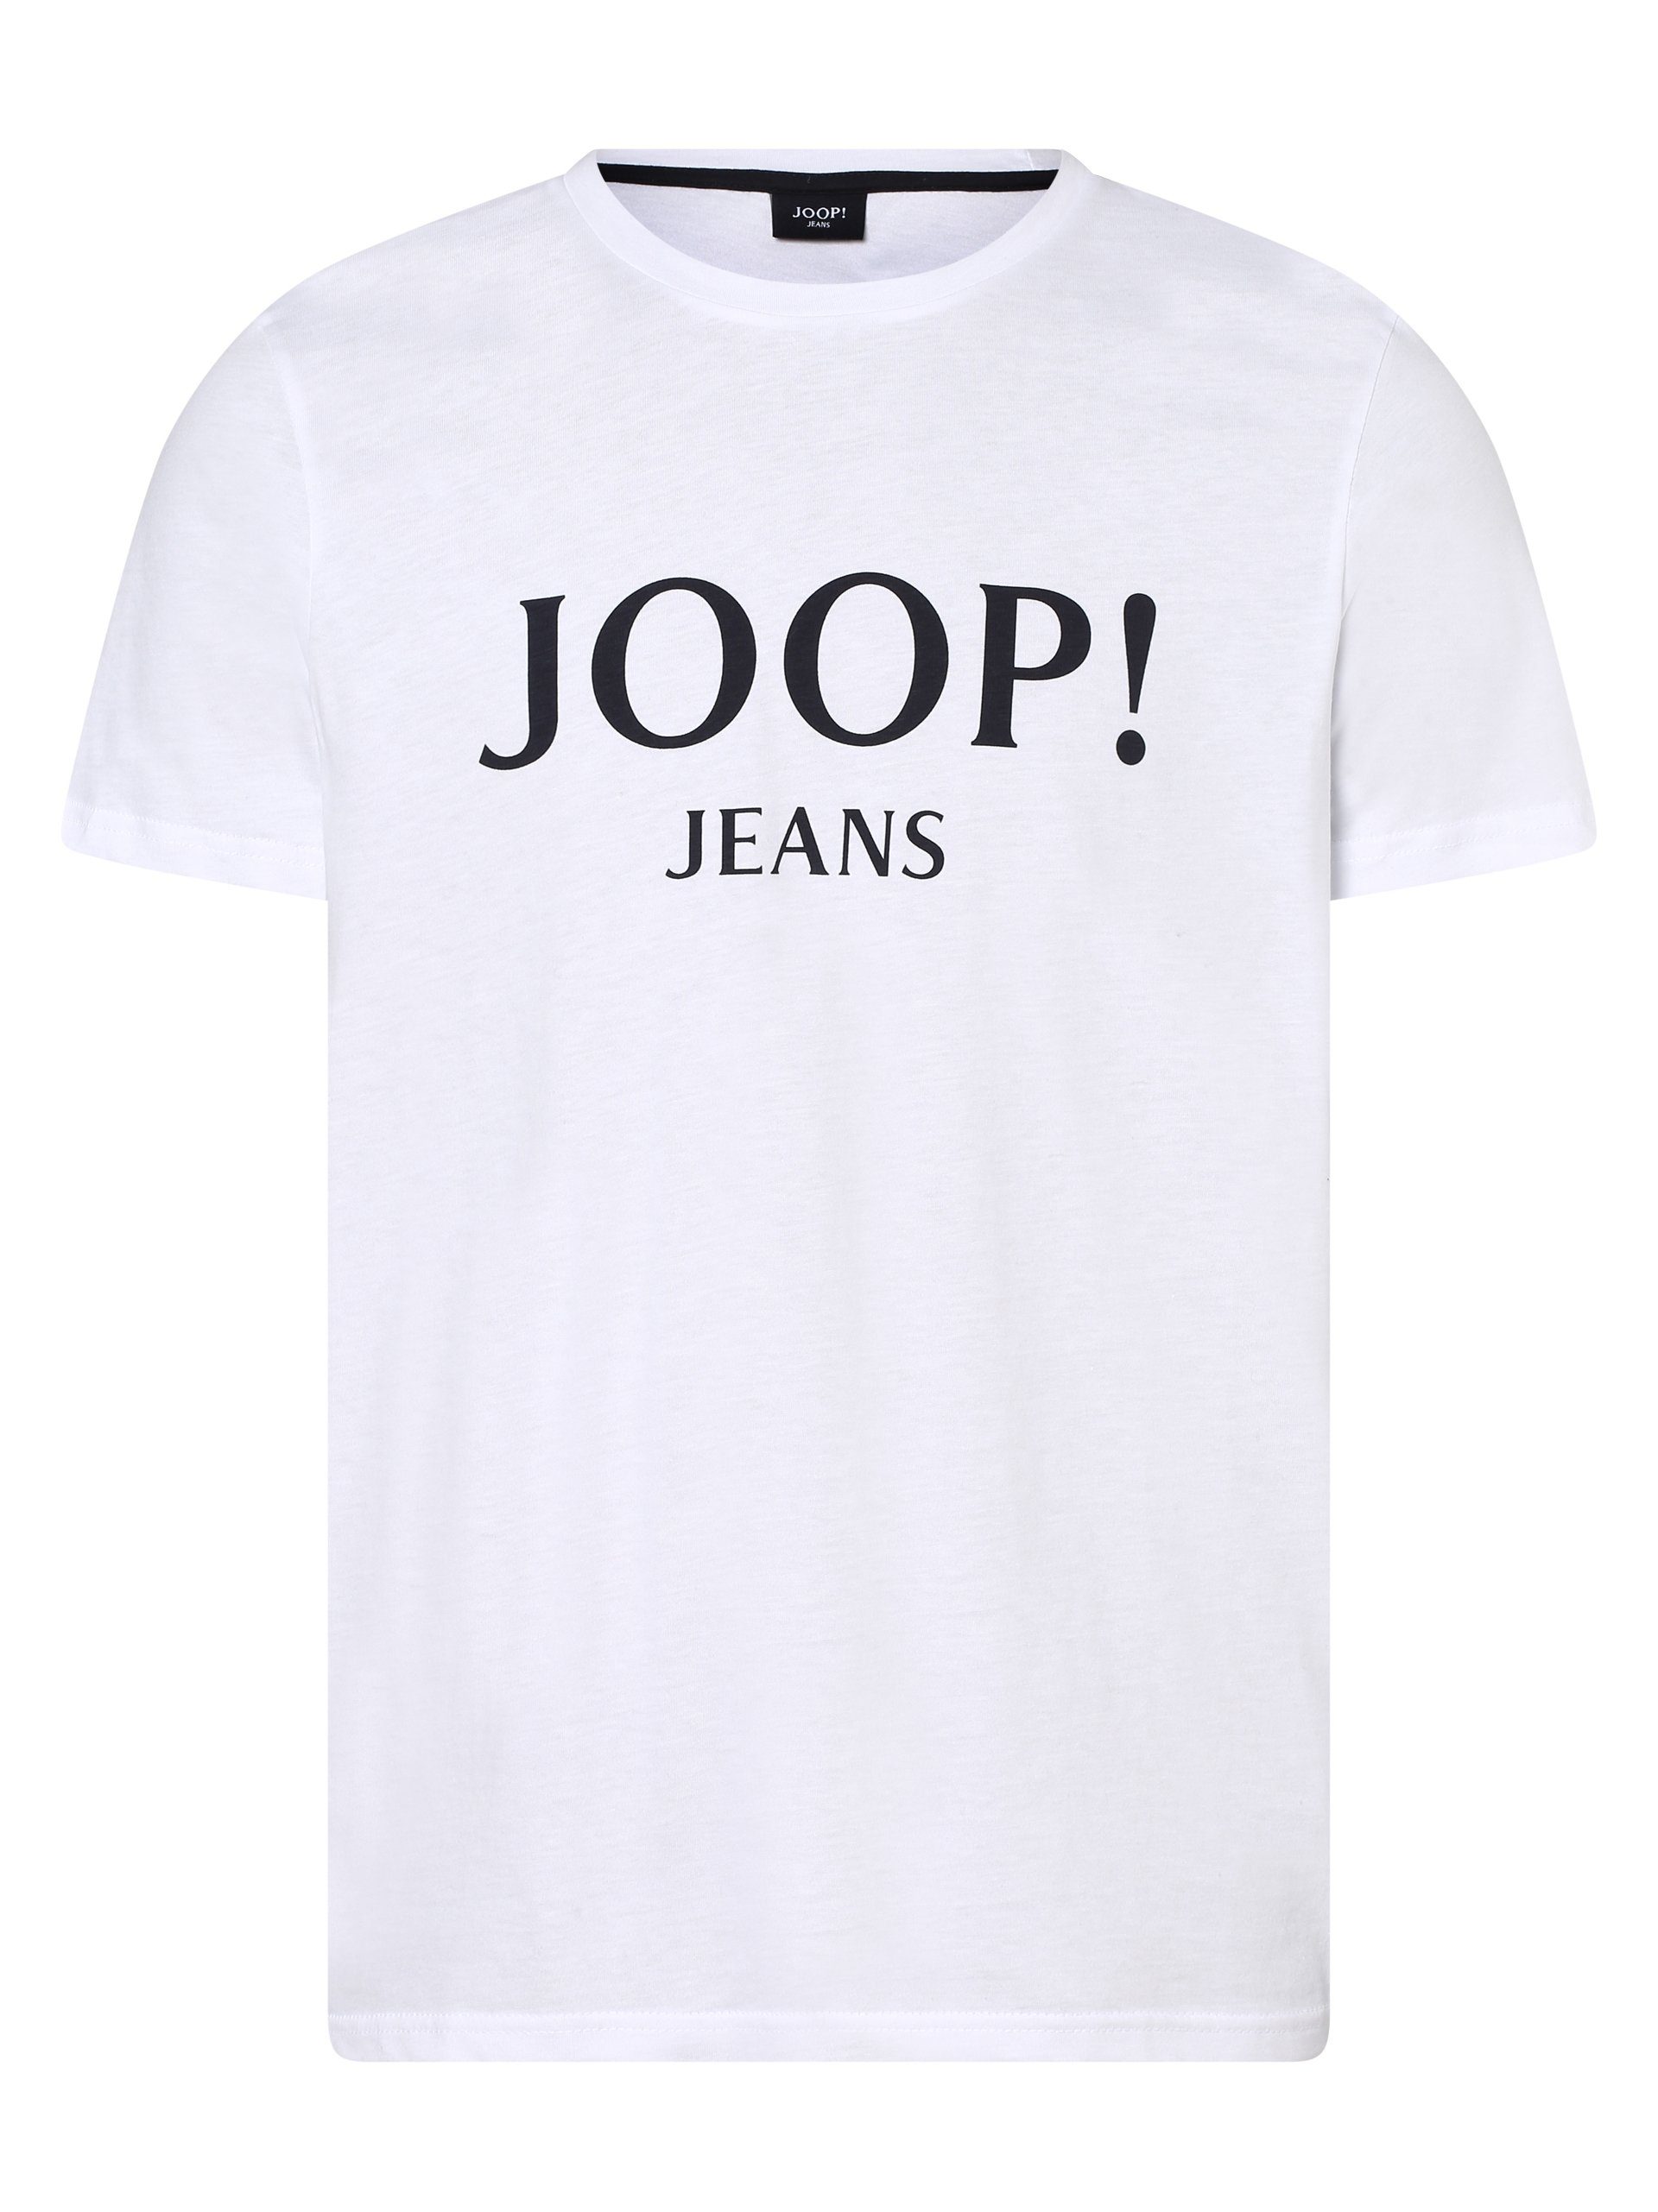 T-Shirt Alex weiß Joop!